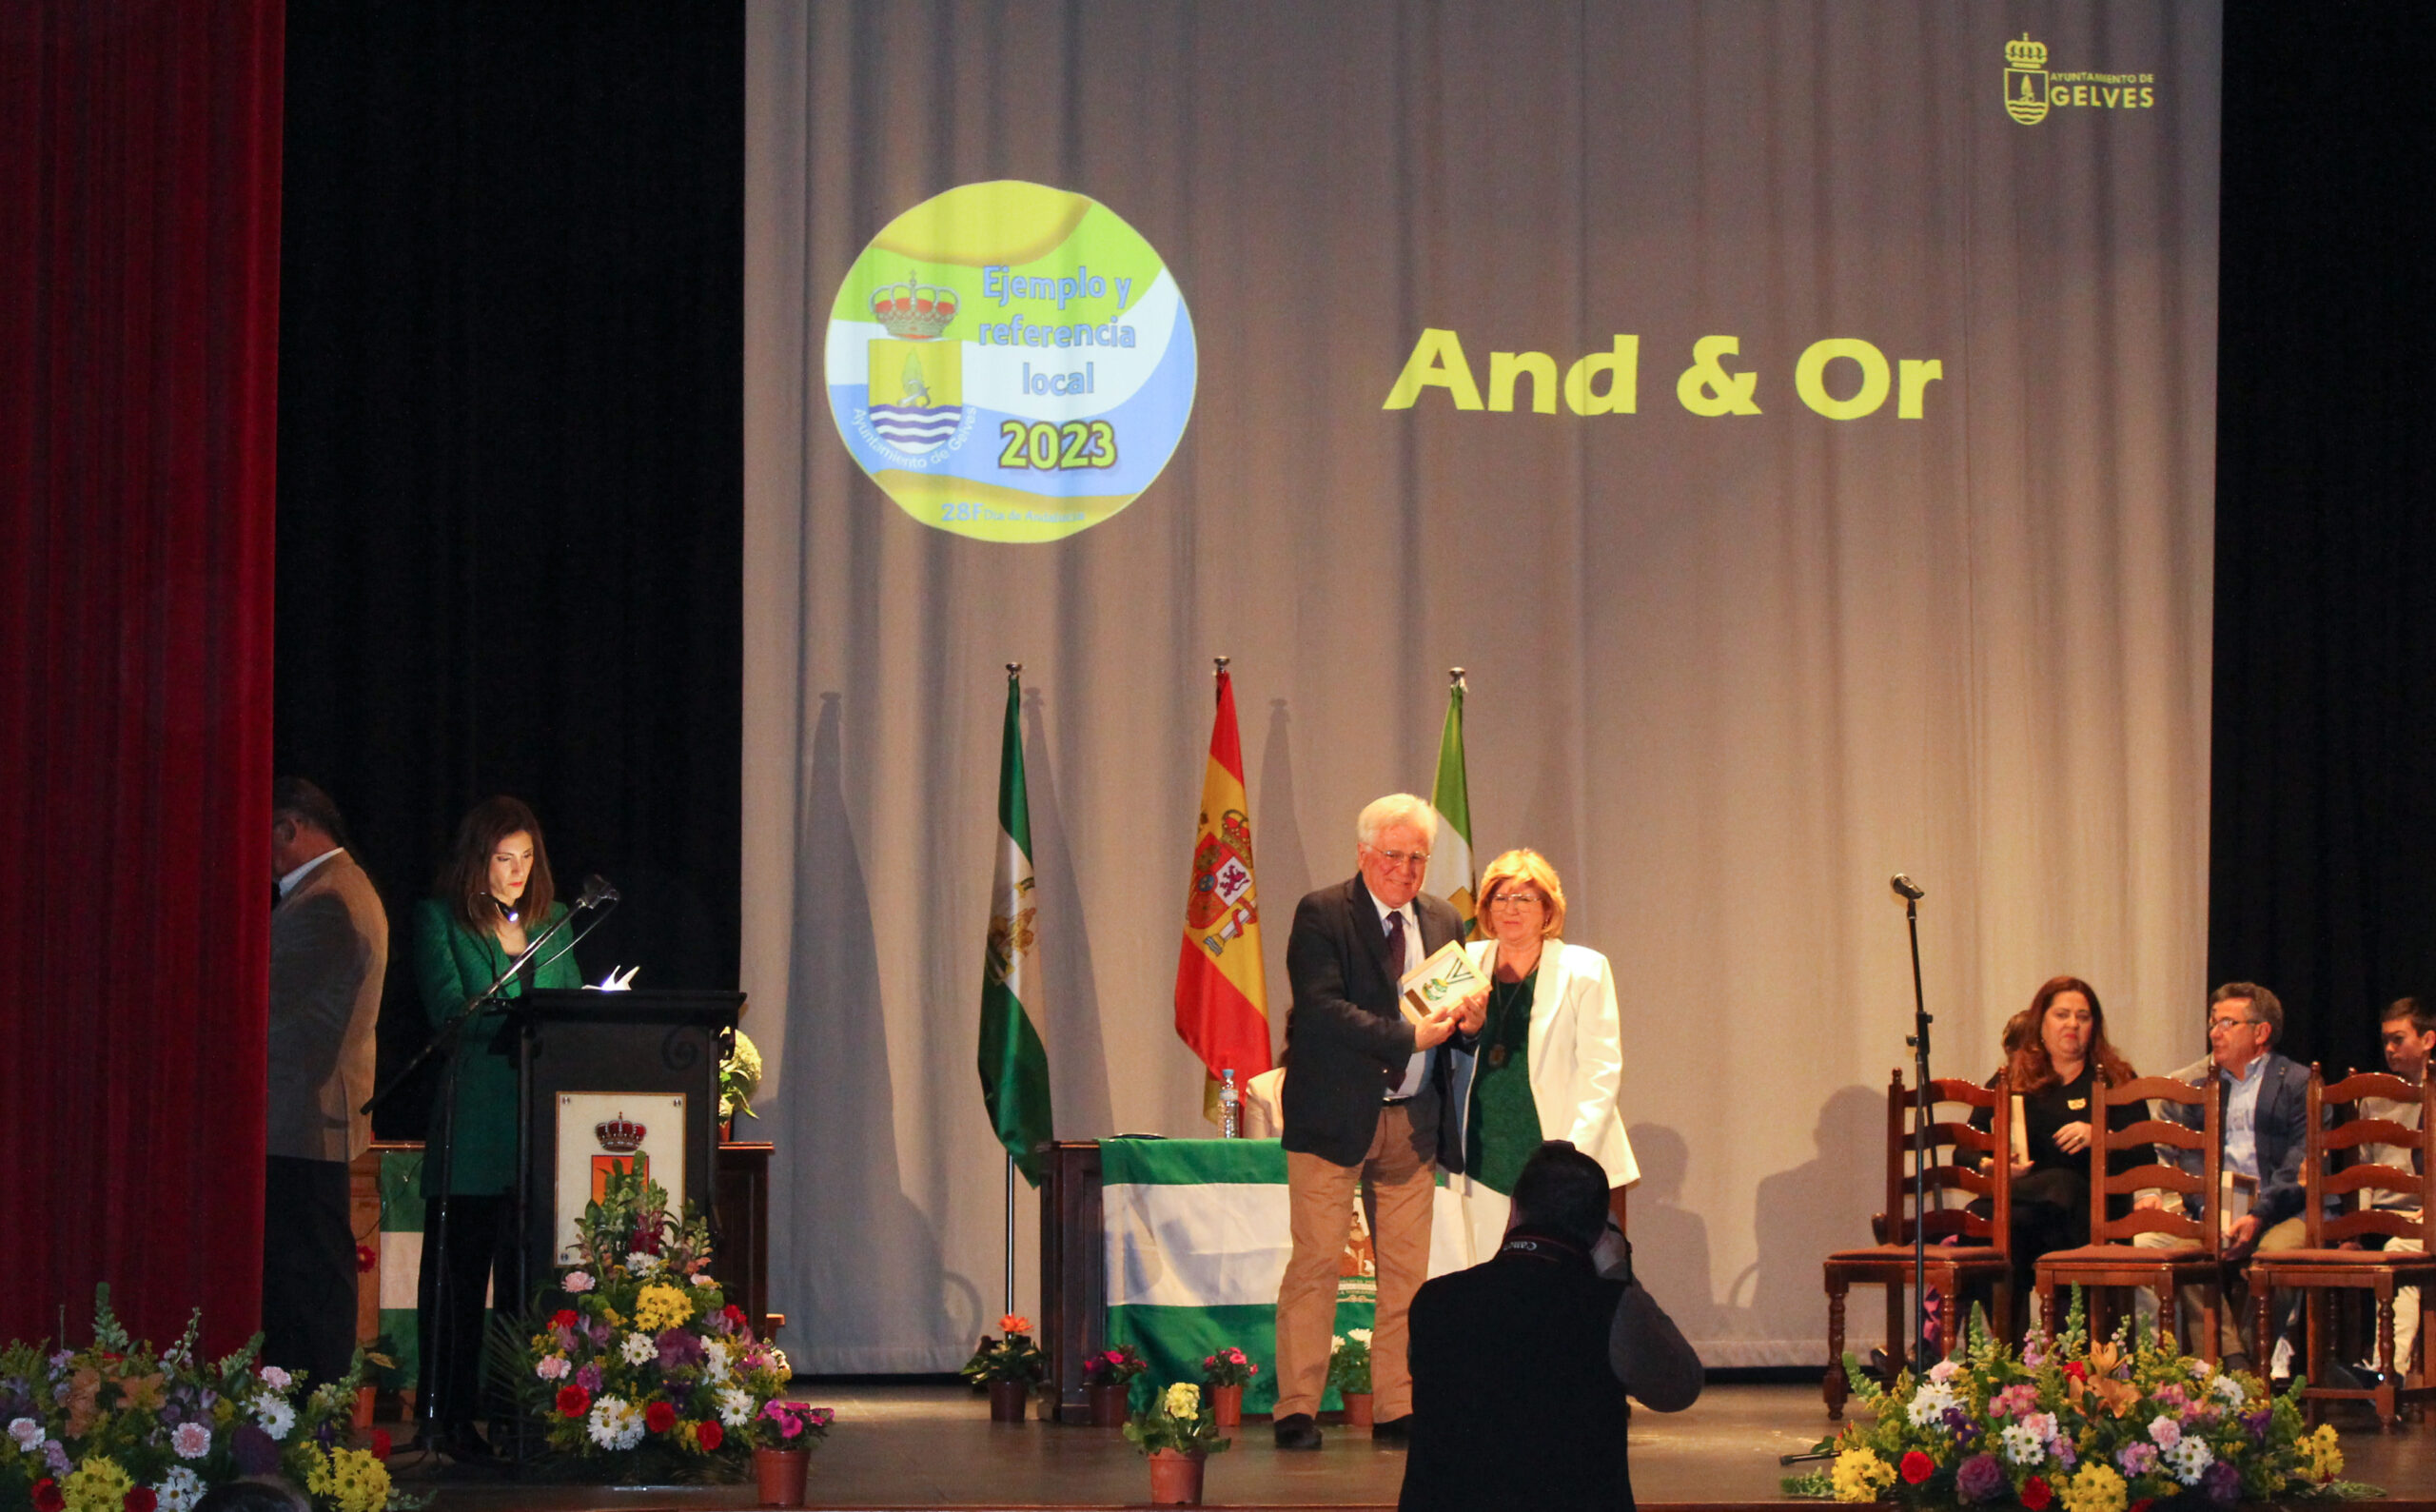 Medalla día de Andalucía 2023 Andyor